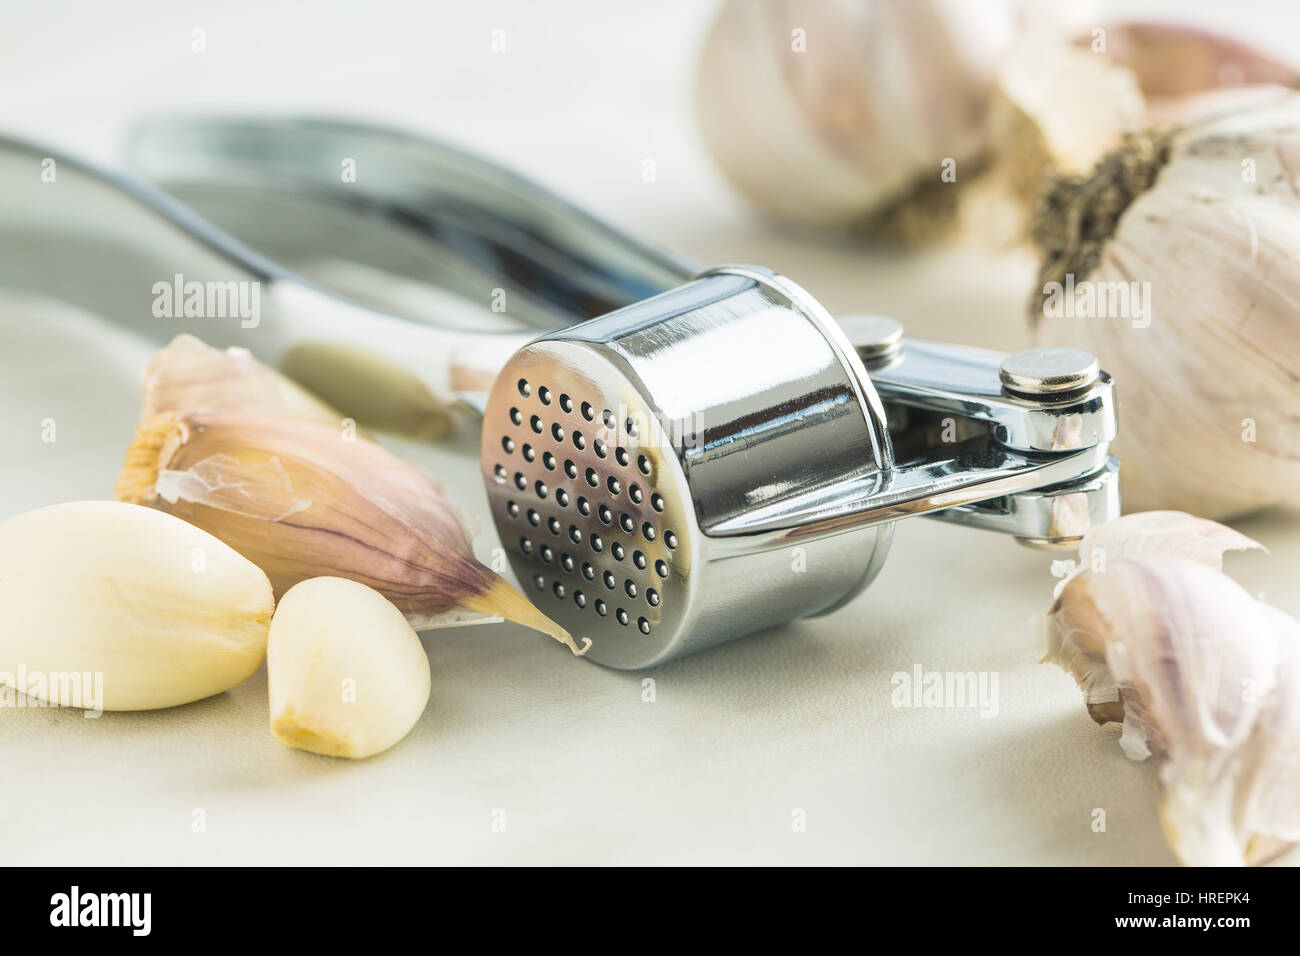 Garlic and garlic press on kitchen table. Stock Photo